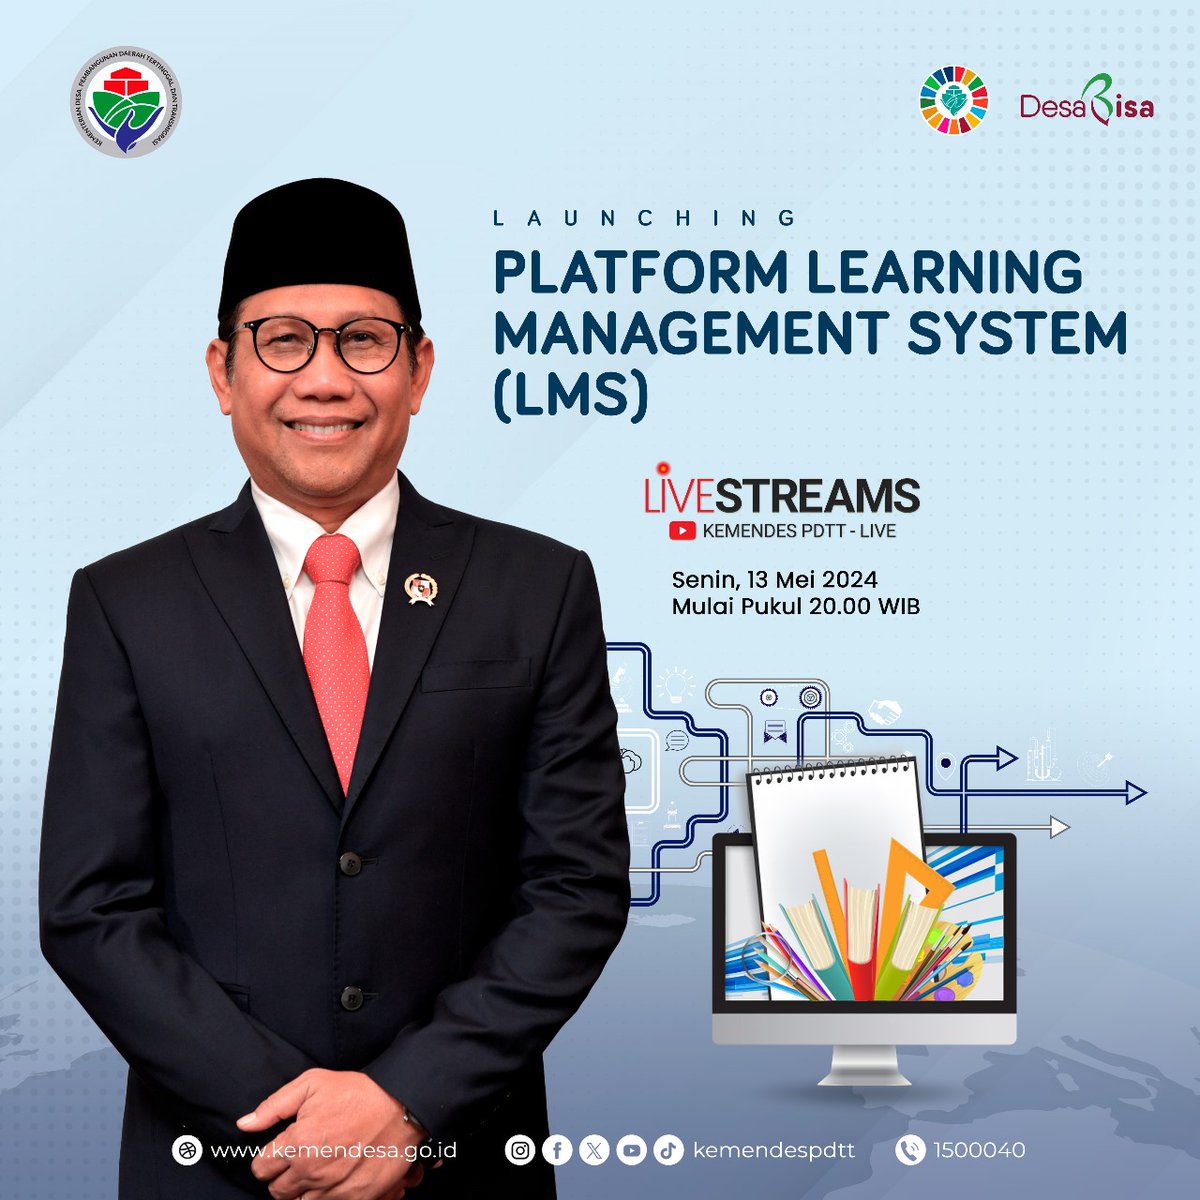 Selamat & Sukses Launching Platform Learning Management Sistem (LMS) 

#LaunchingLMS
#DesaBisa

@jokowi
@prabowo
@halimiskandarnu
@Kemendespdtt
@taufikmadjid71
@yusradaridesa
@tppkemendes
@irfan_aja84